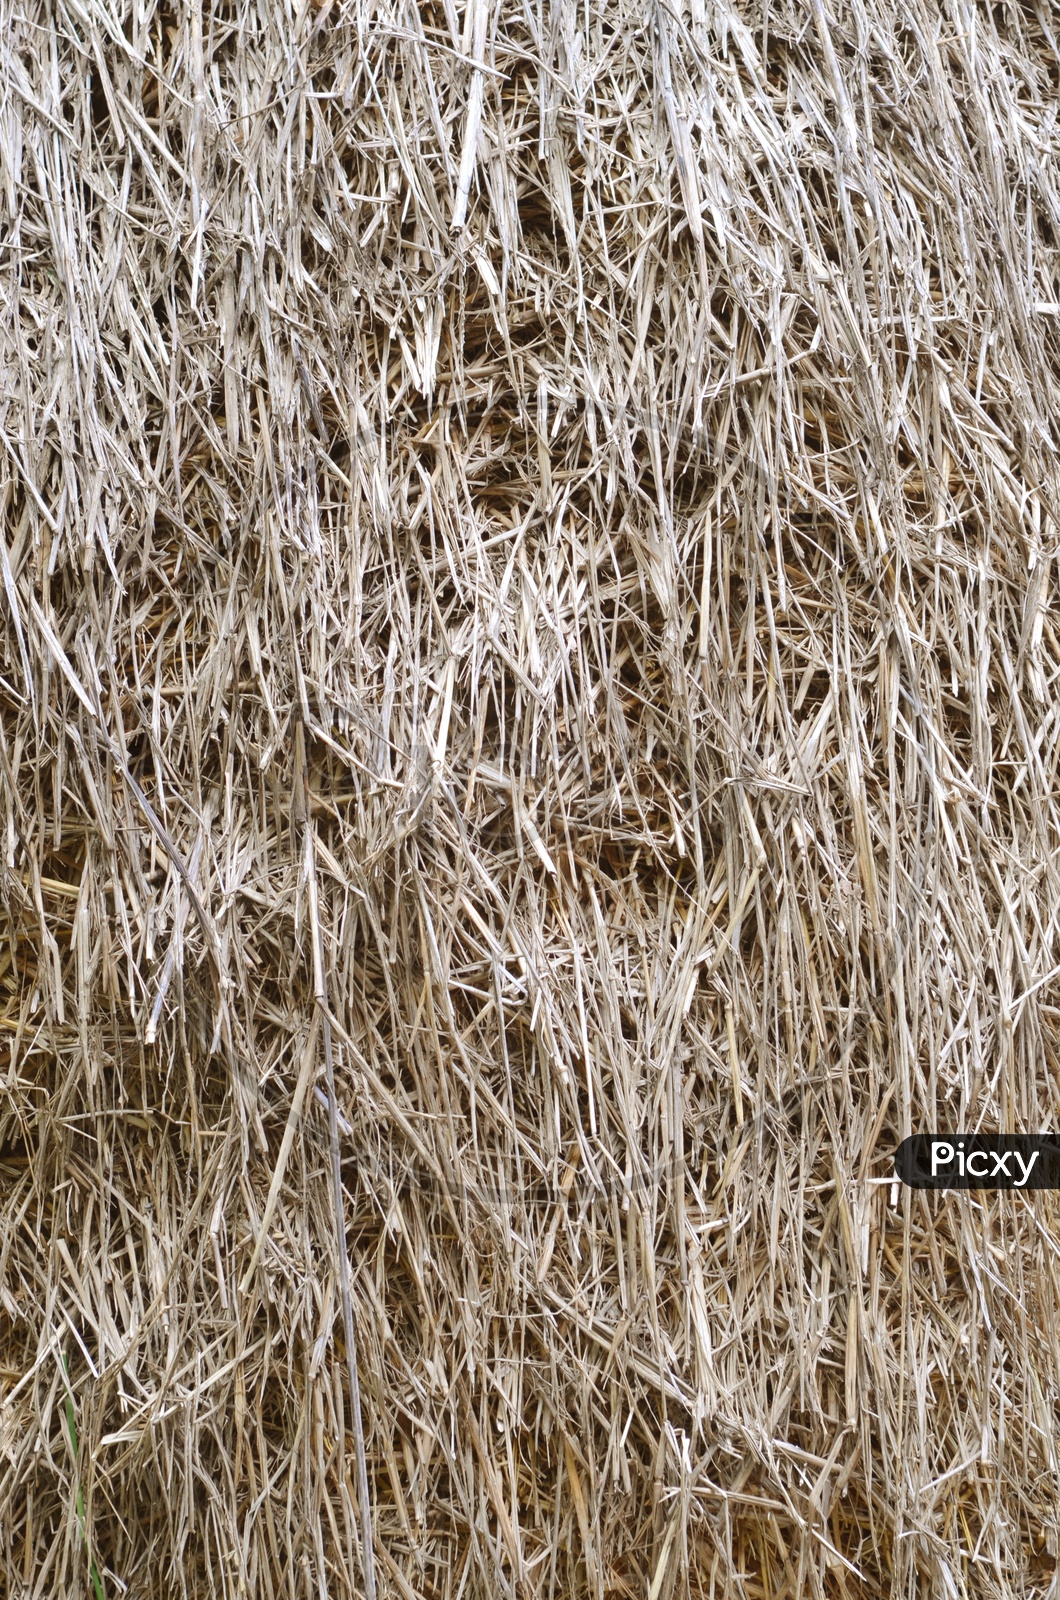 dried Straw texture background